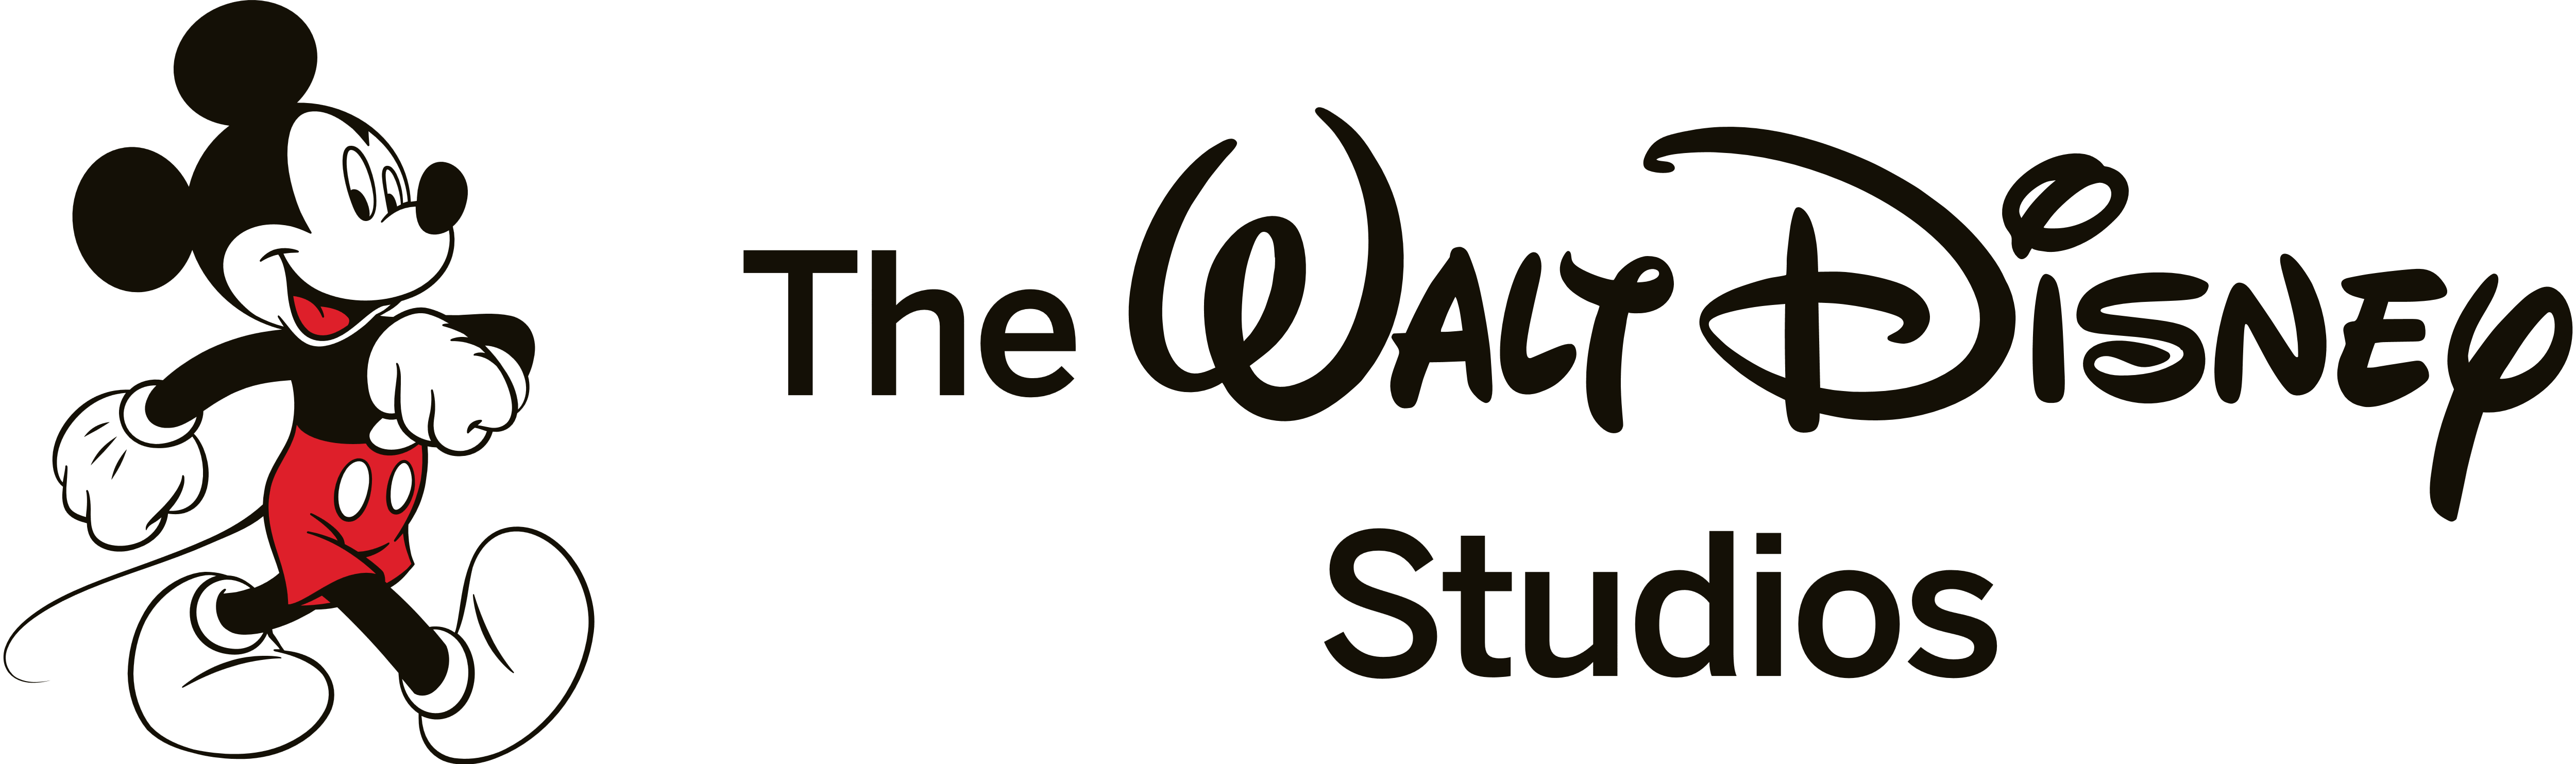 The Walt Disney - Logos Download